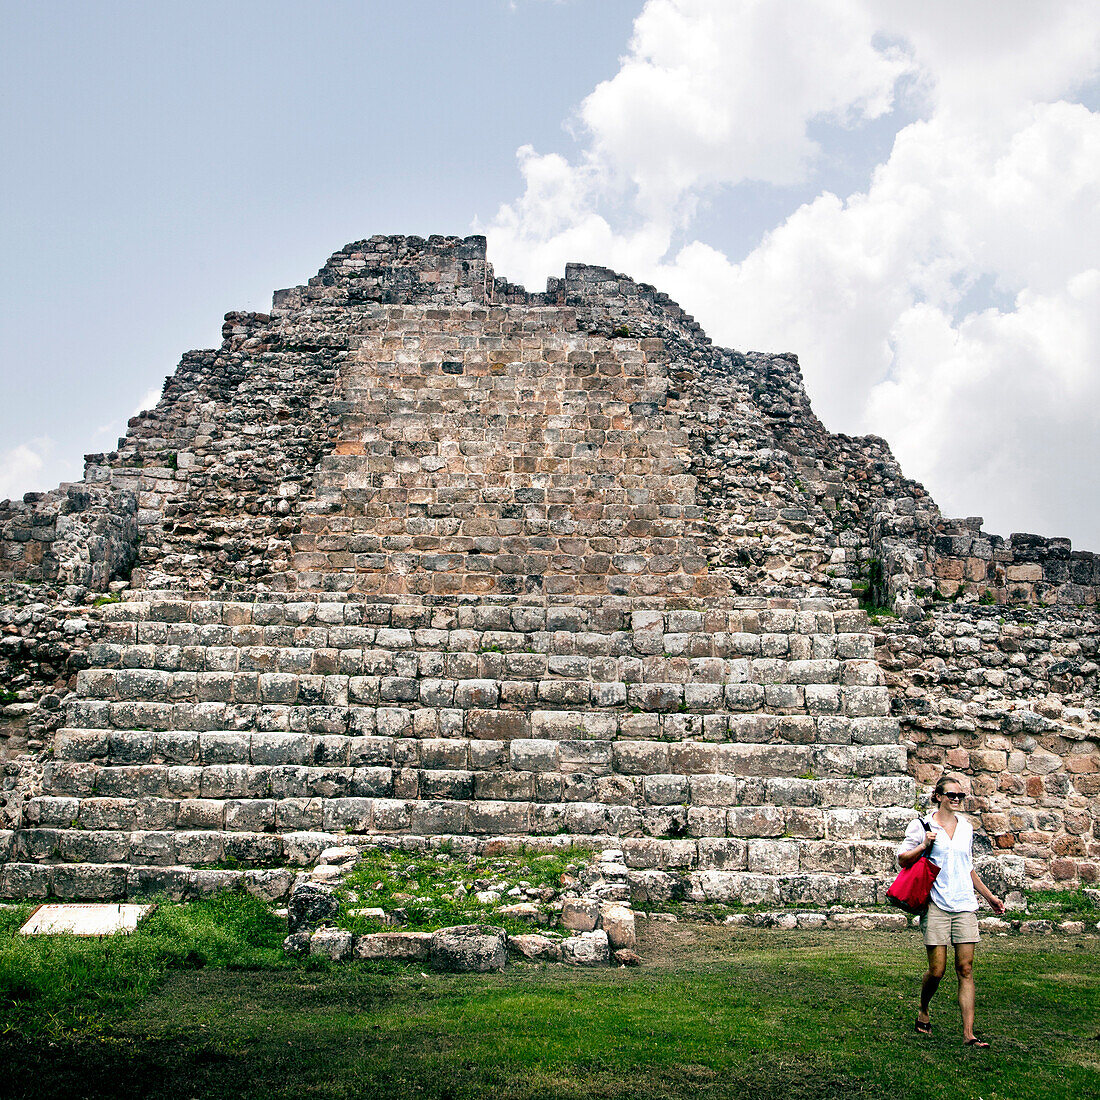 A young woman in a white shirt and tan shorts walks near a Mayan stone pyramid ruin near Merida, Mexico.